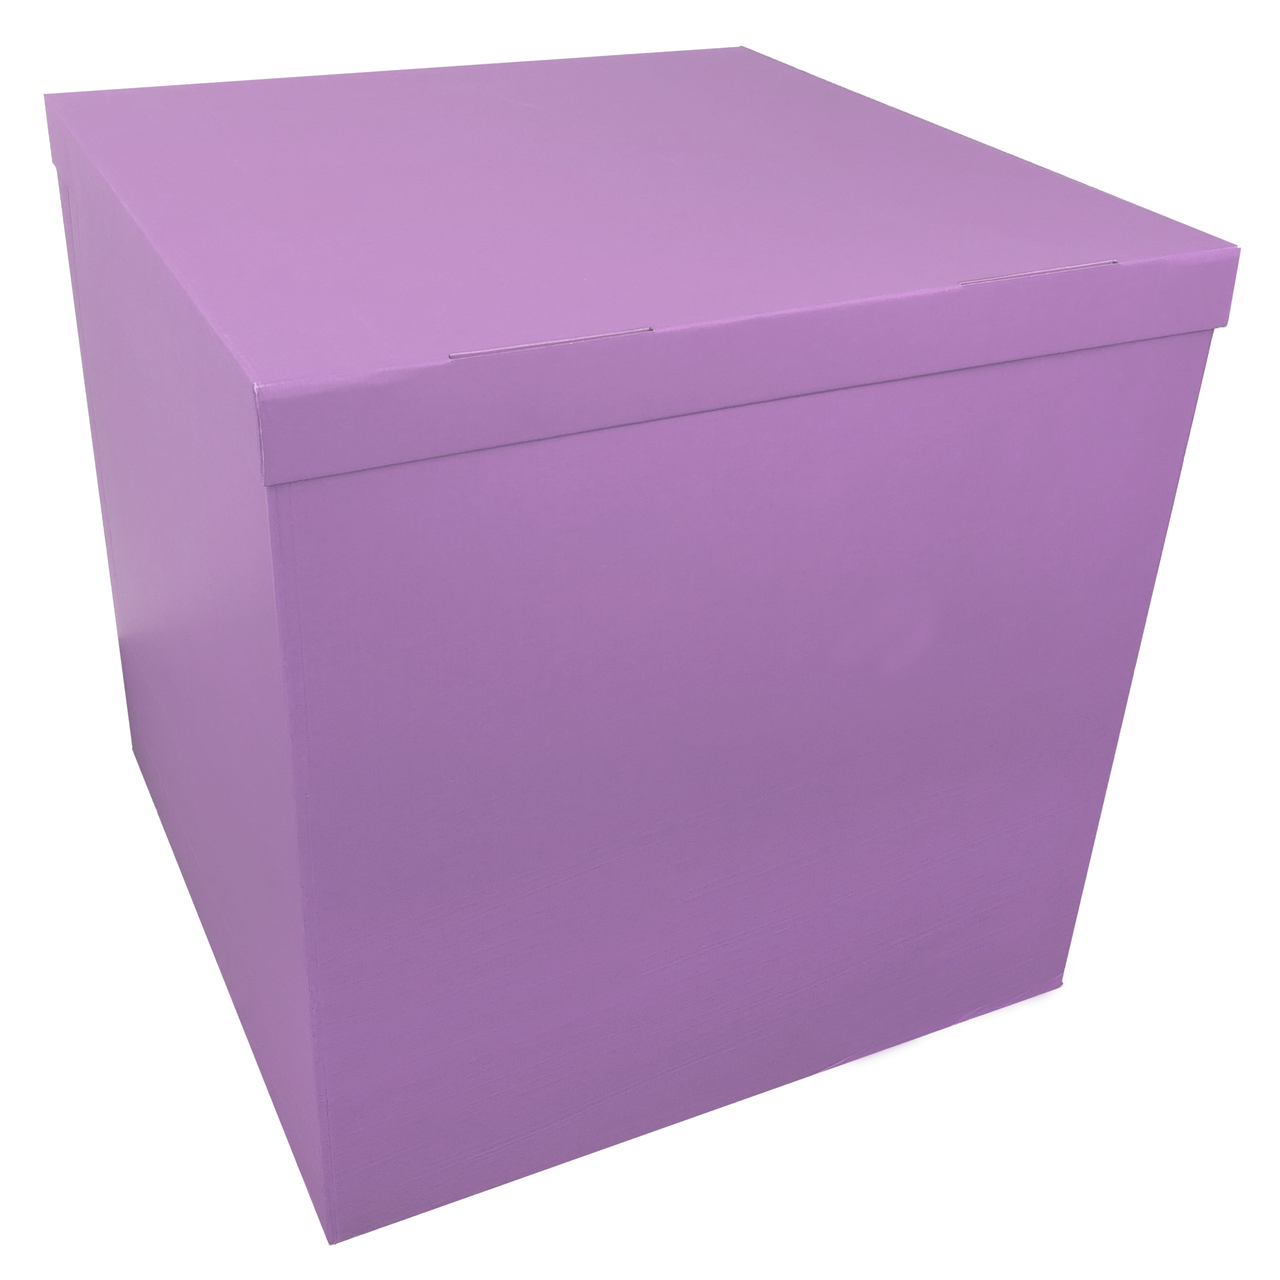 Большой коробок для шаров. Коробка для шаров 70х70х70. Коробка для шаров 60х60х60 серебро. Коробка самосборная 70х70х70. Коробка для шаров 60х60х60 розовая.